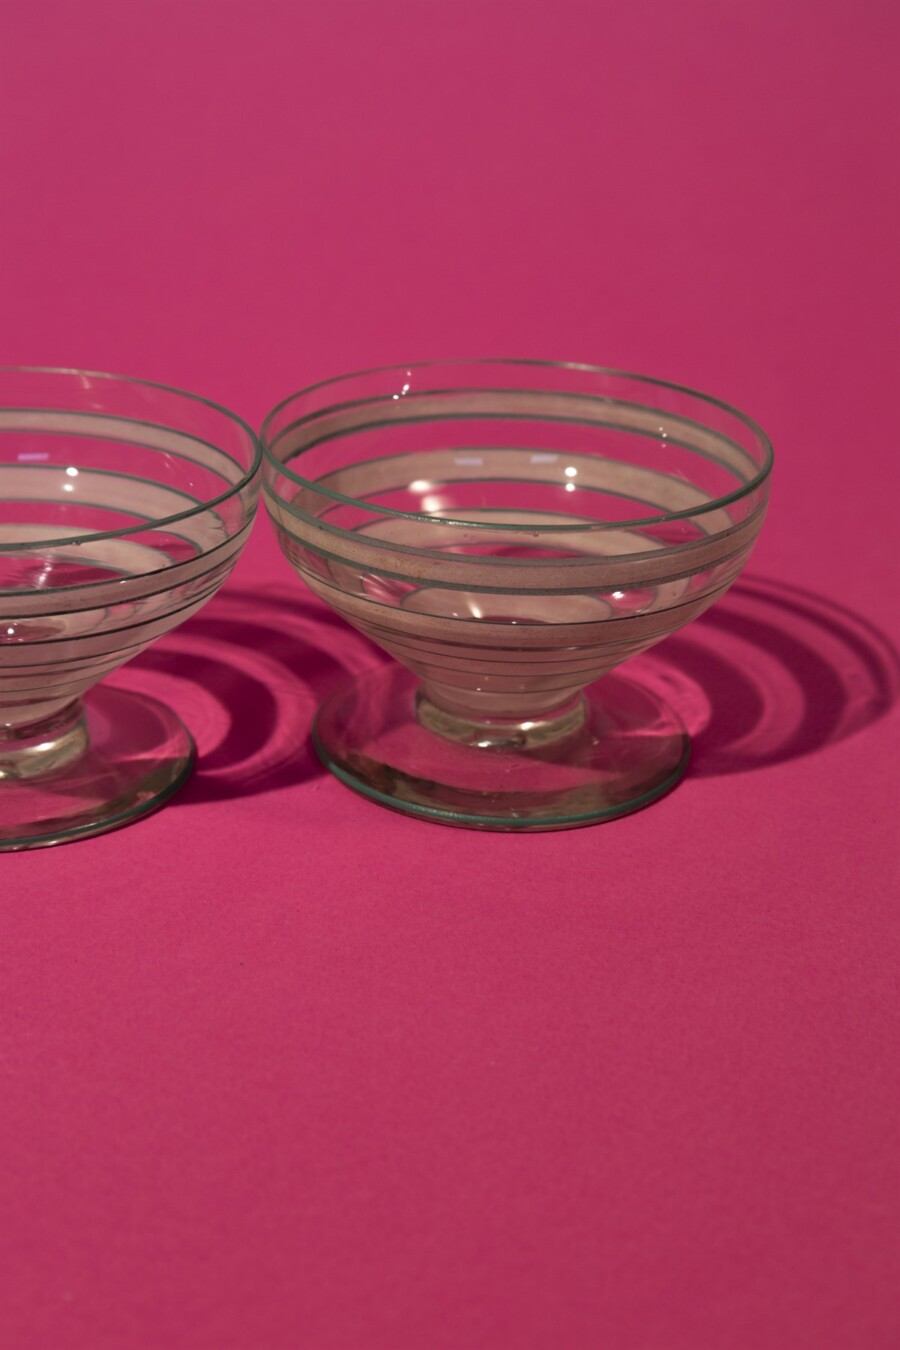 Striped dessert glasses set of three